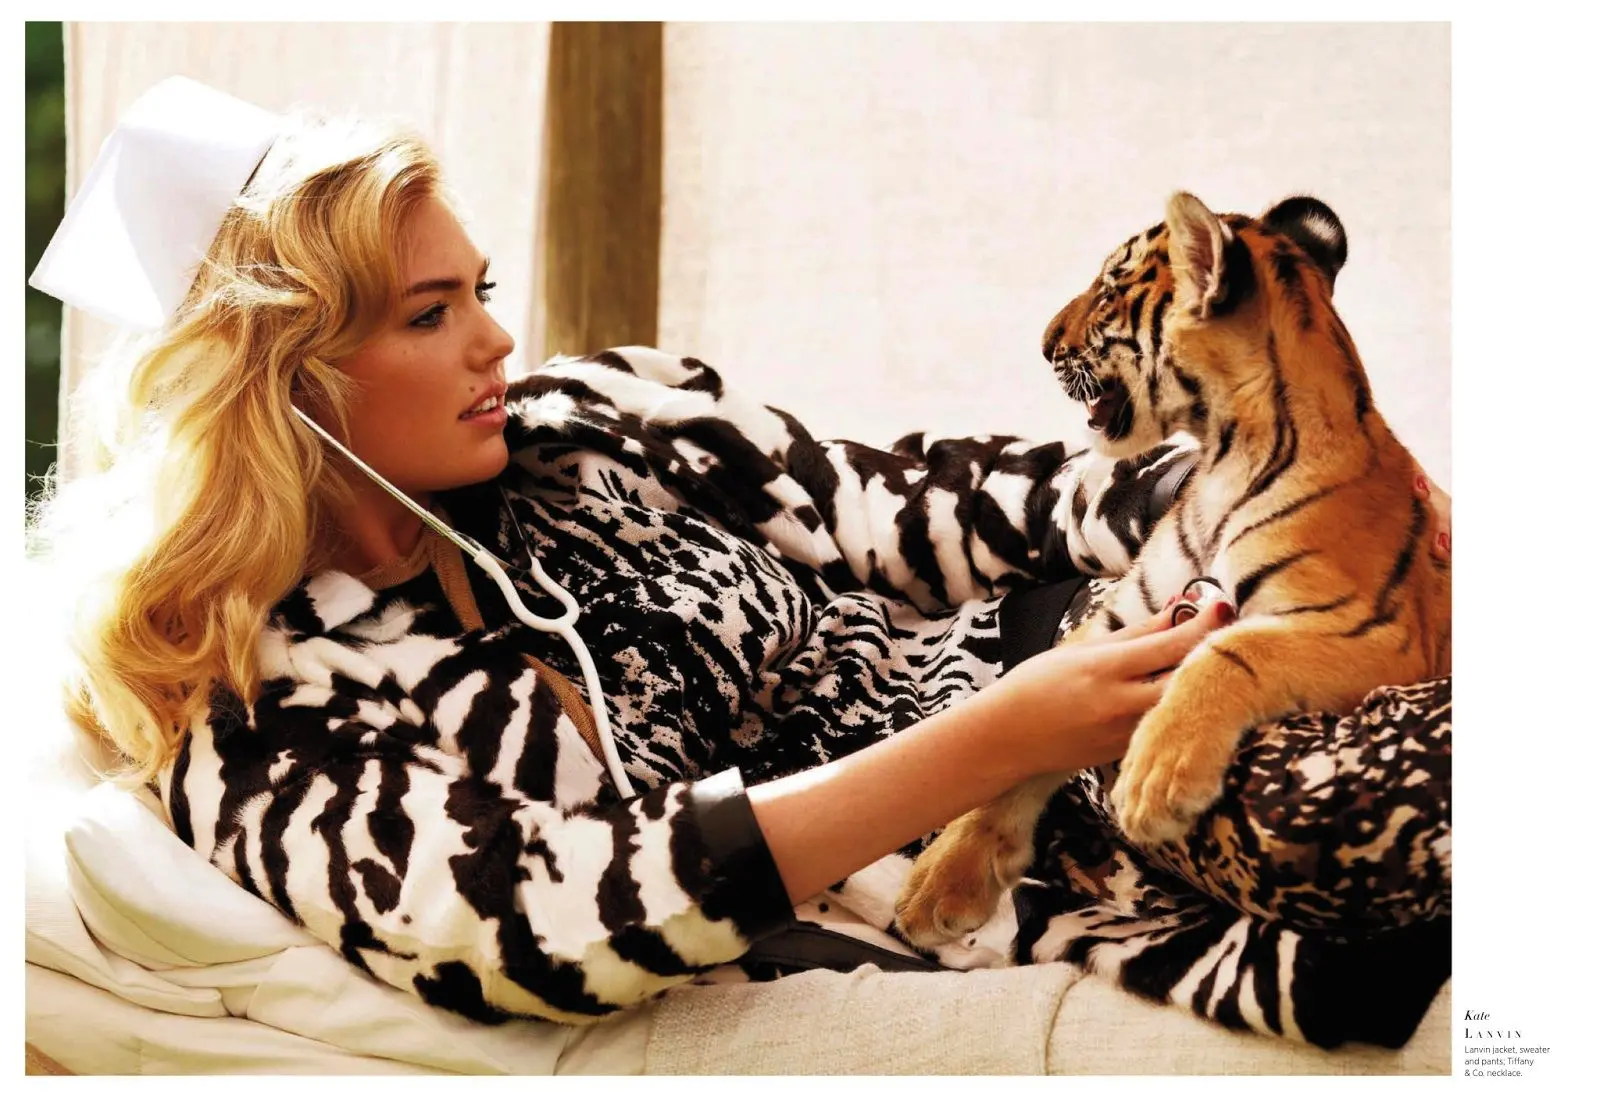 “The animal nursery” : Des tops et des bébés tigres